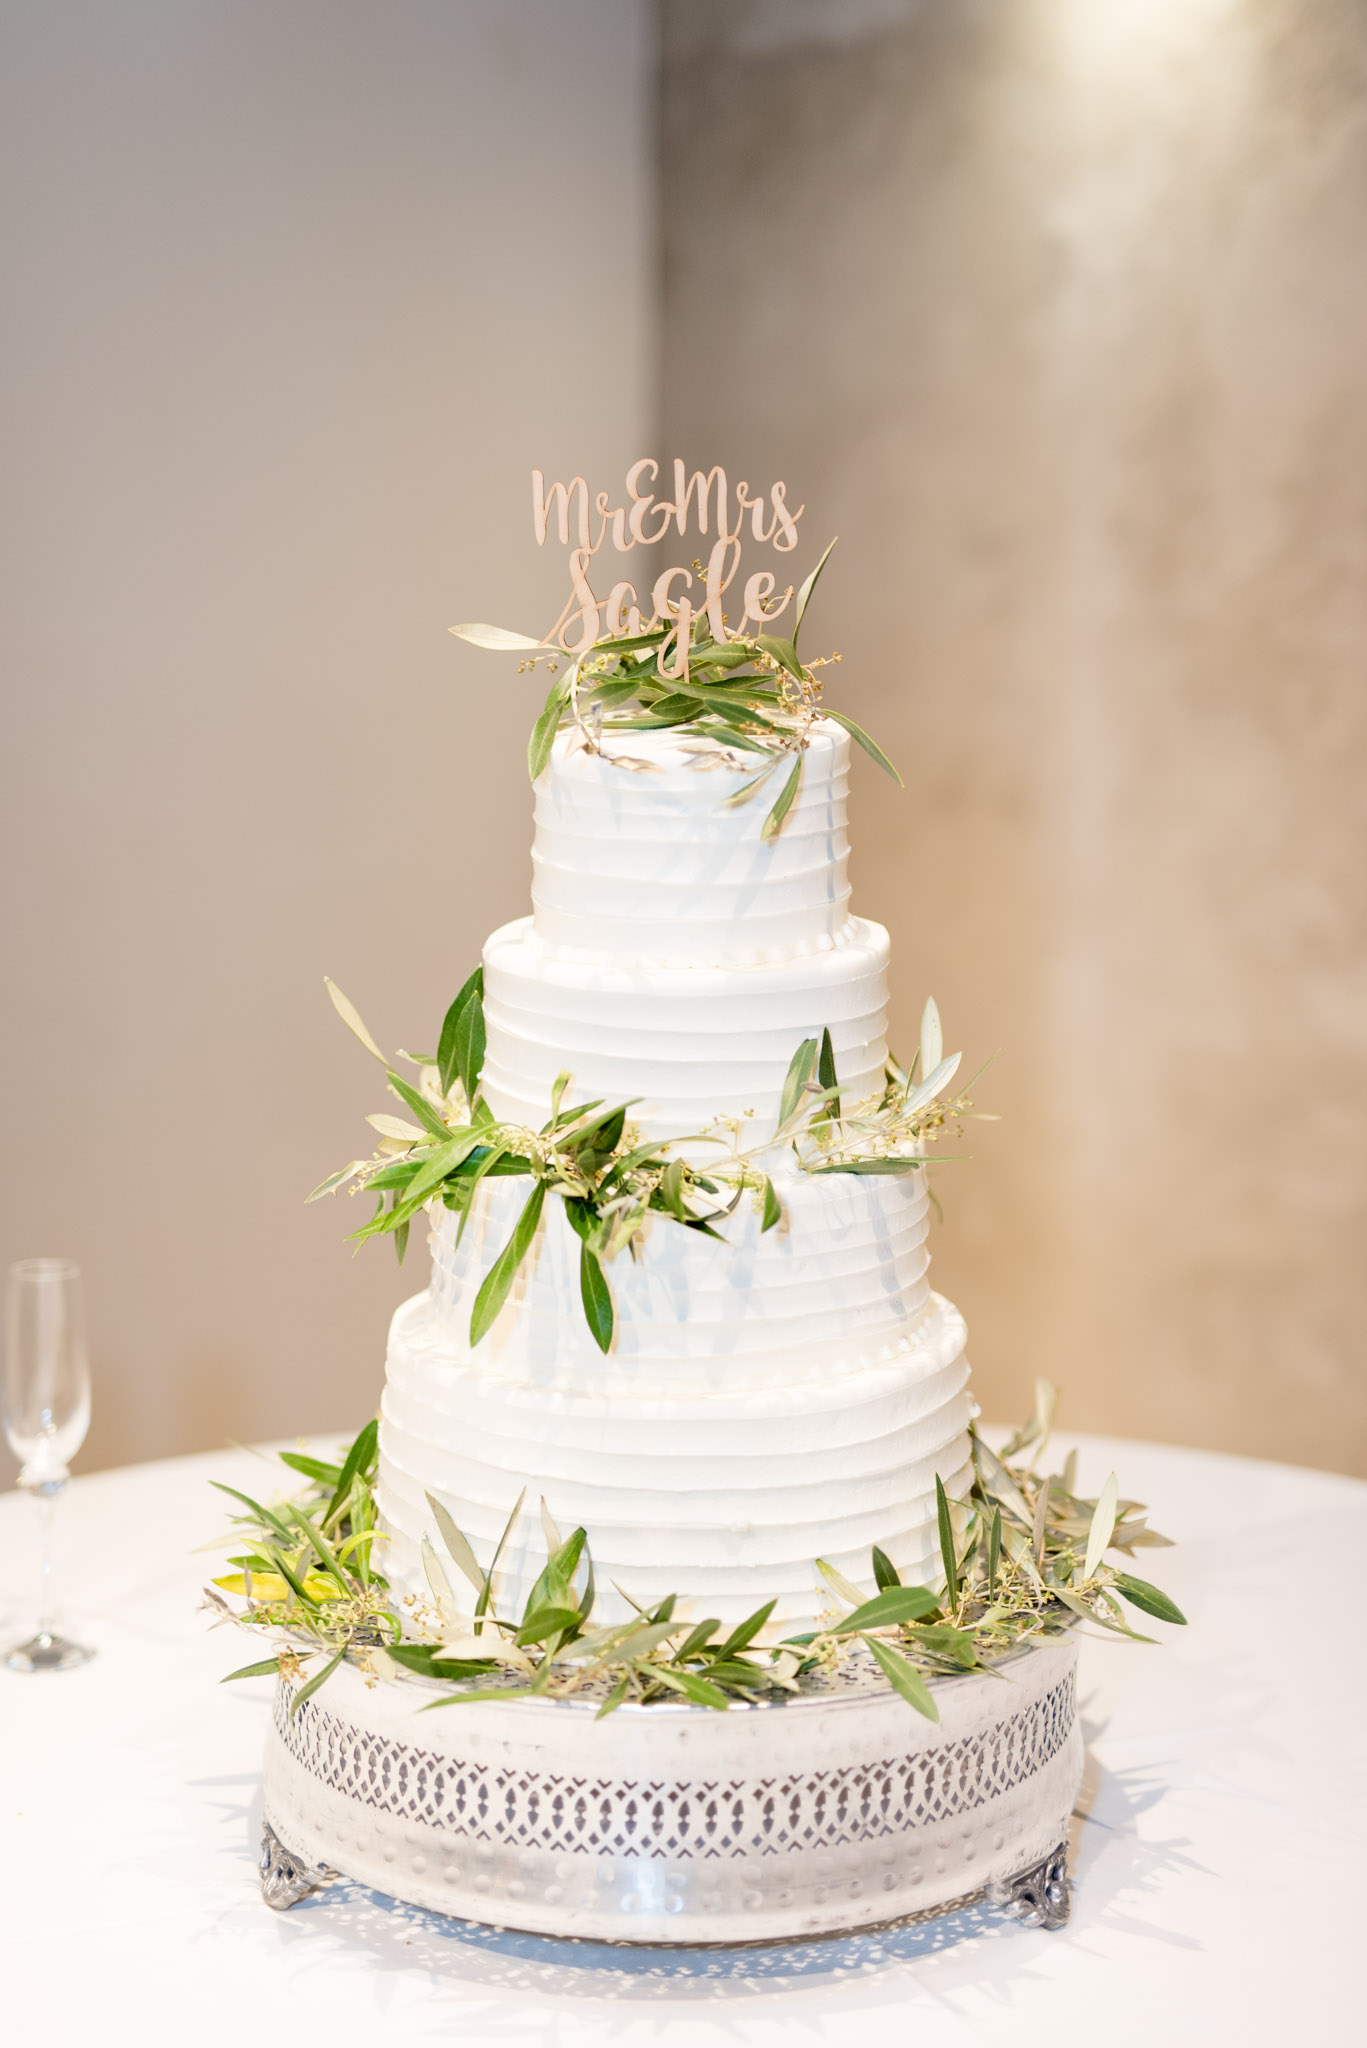 White wedding cake sits on table.